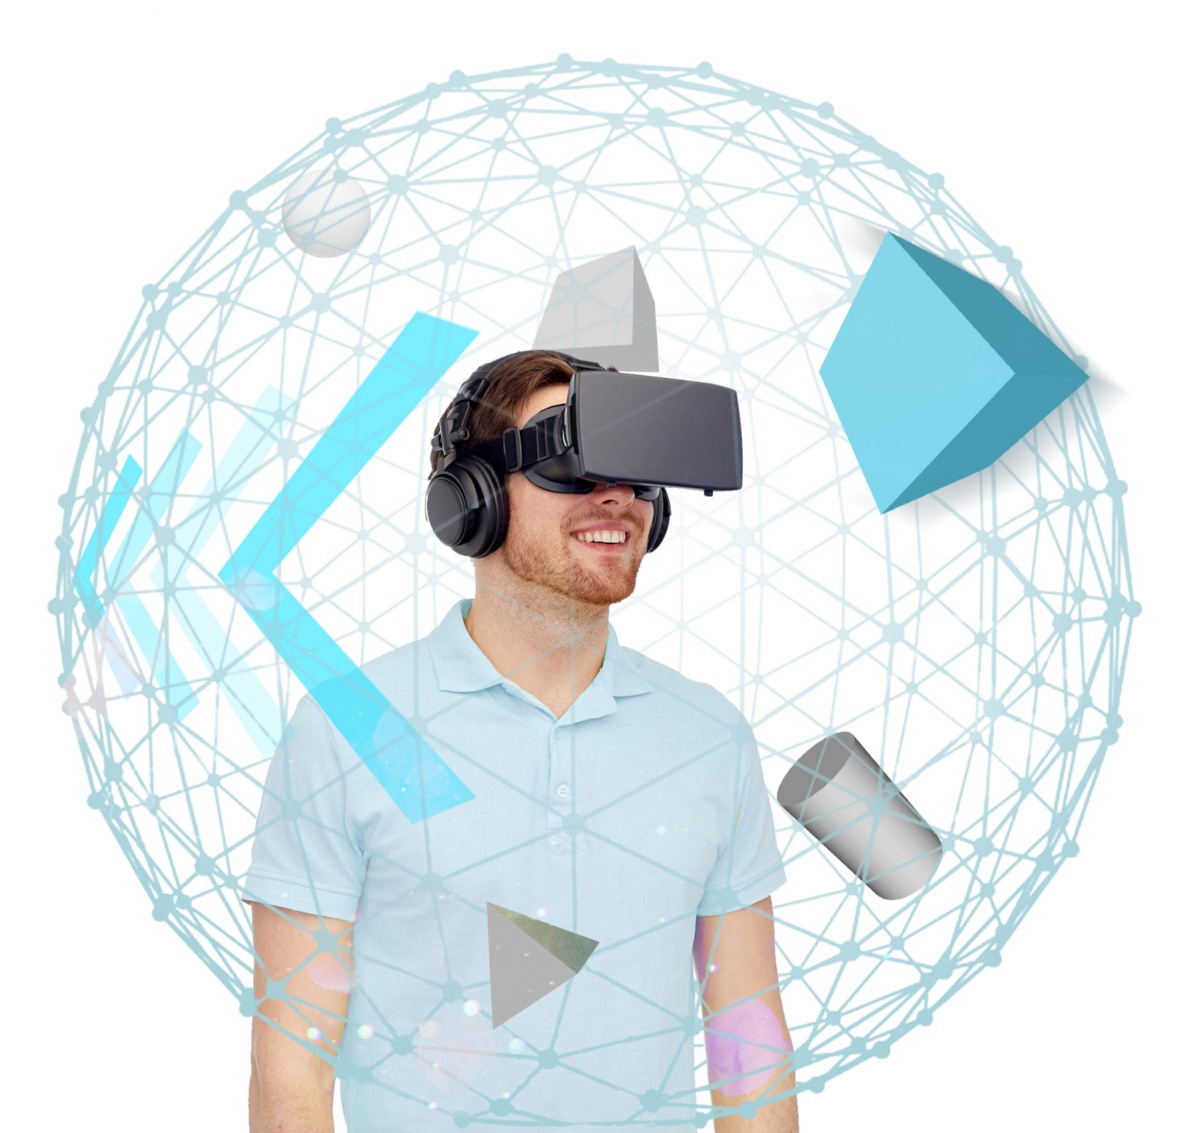 Vr презентация. VR технологии. Устройства виртуальной реальности. Интерактивная виртуальная реальность. Дизайнер виртуальной реальности.